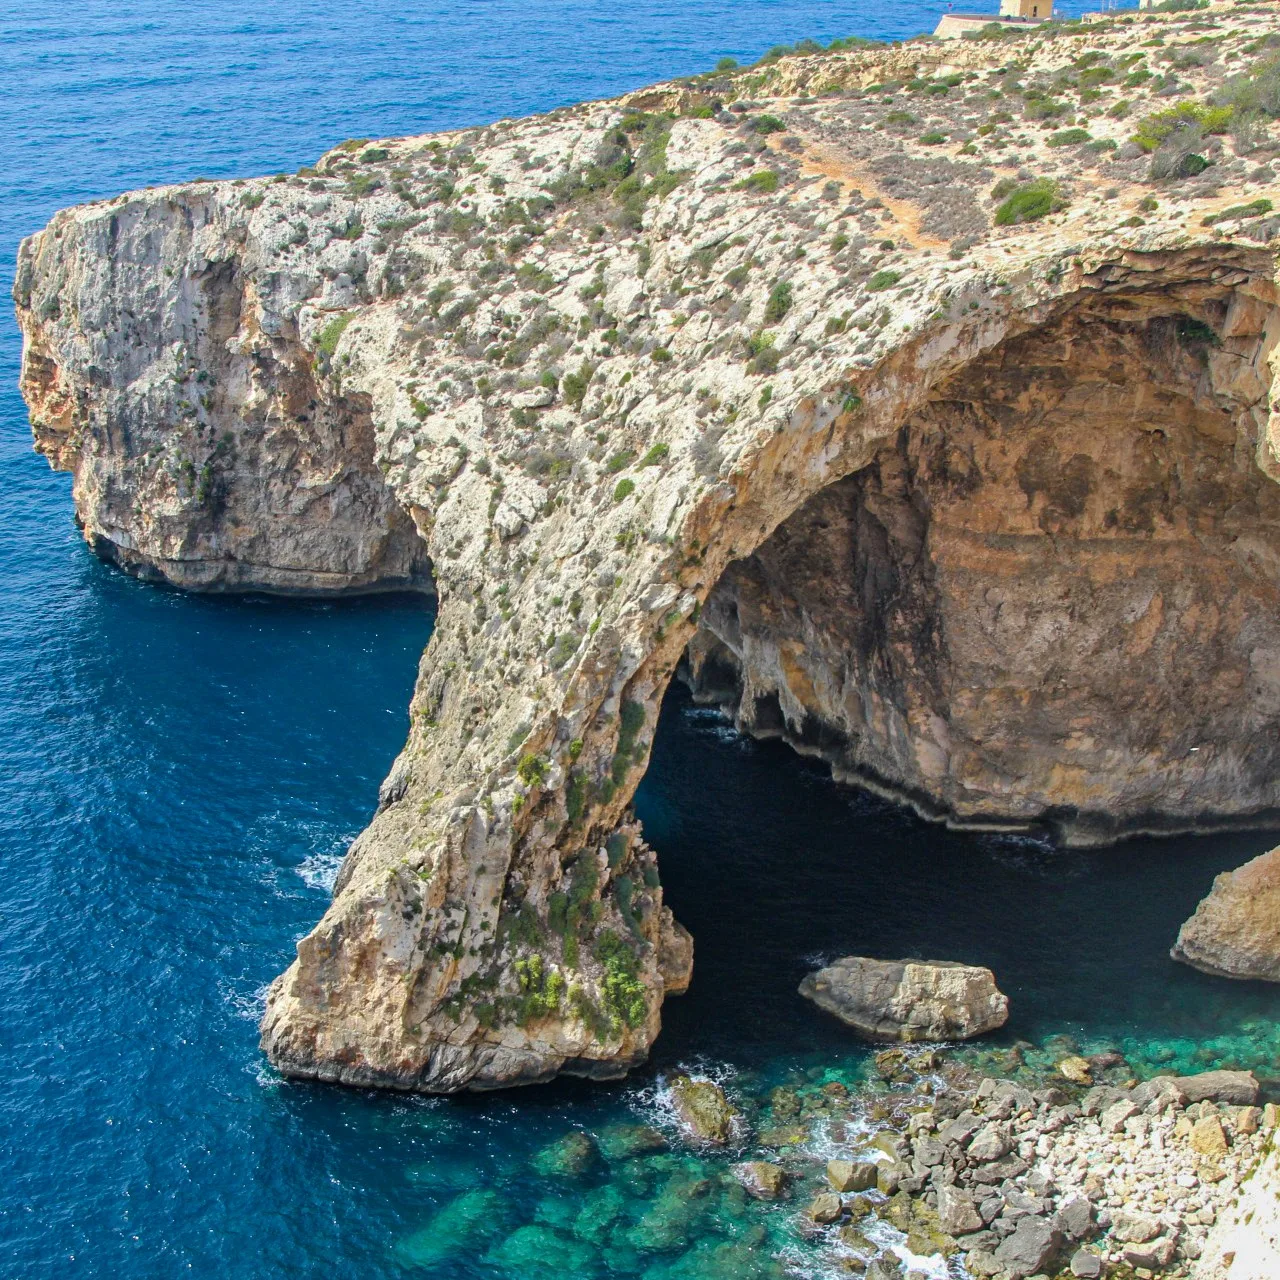 De Blue Grotto op Malta